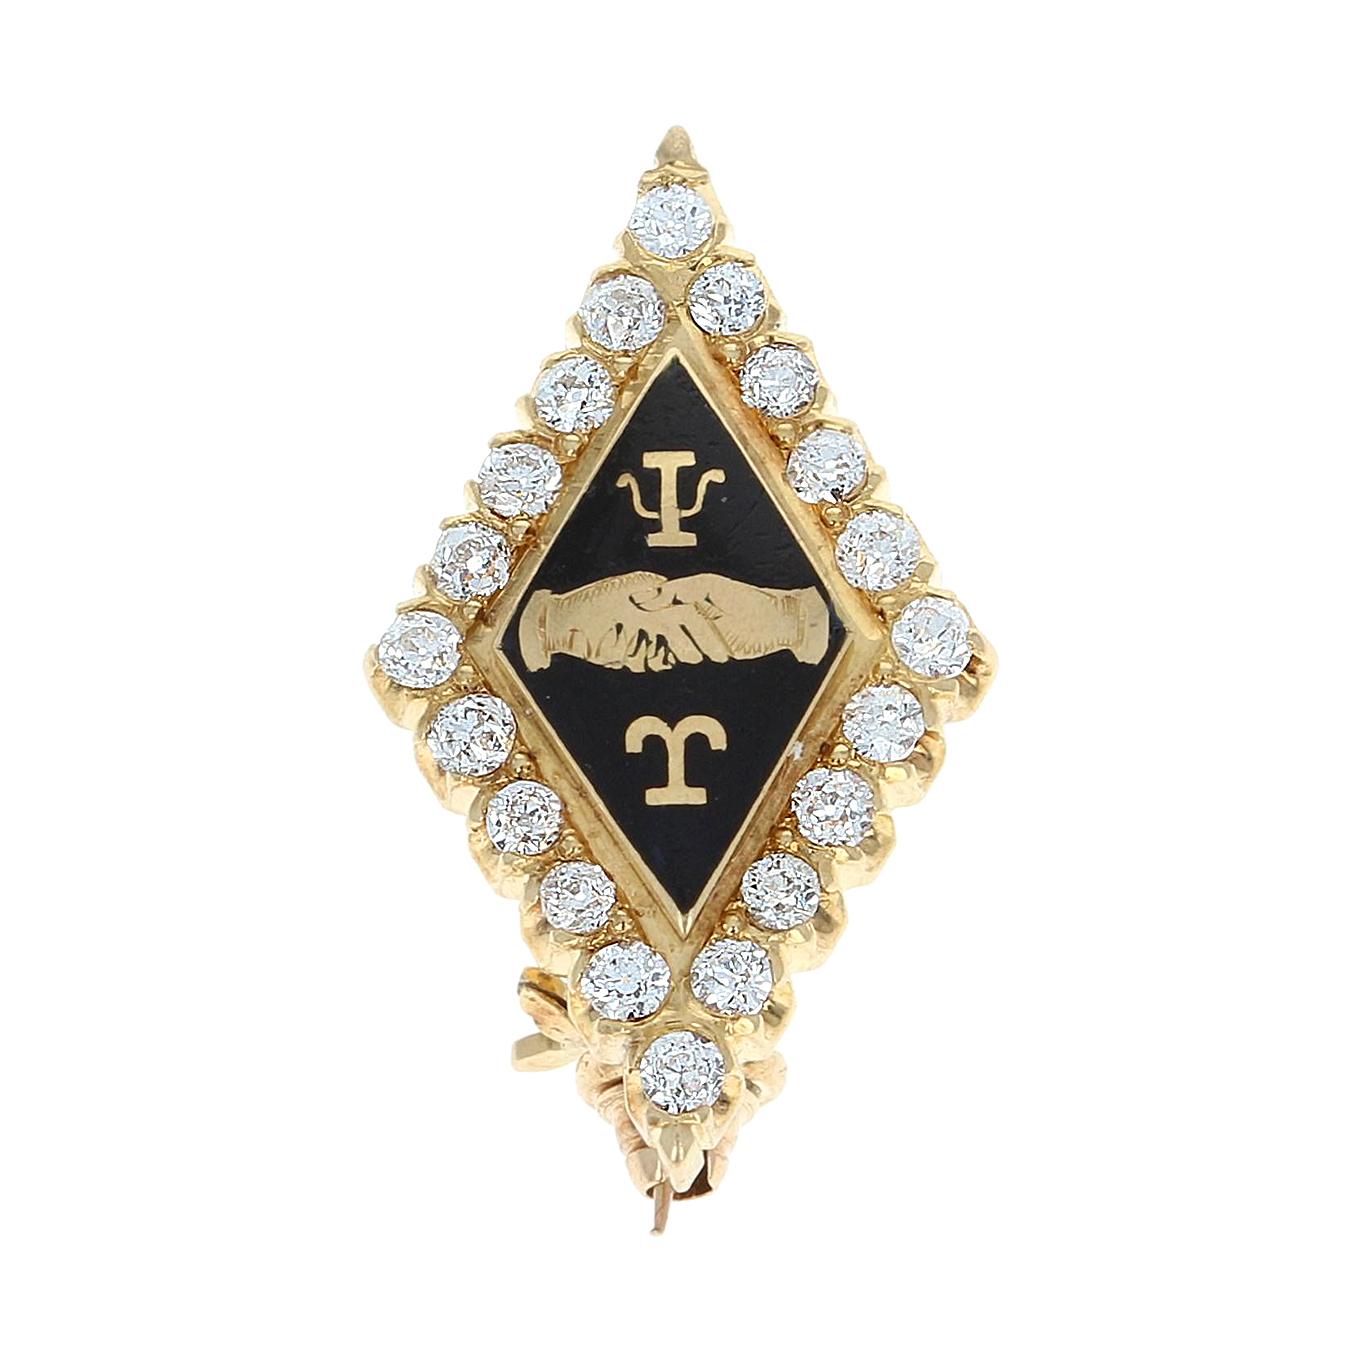 Antike Anstecknadel von Dartmouth Fraternity 1898, Upsilon Badge, 14 Karat Gold Diamanten